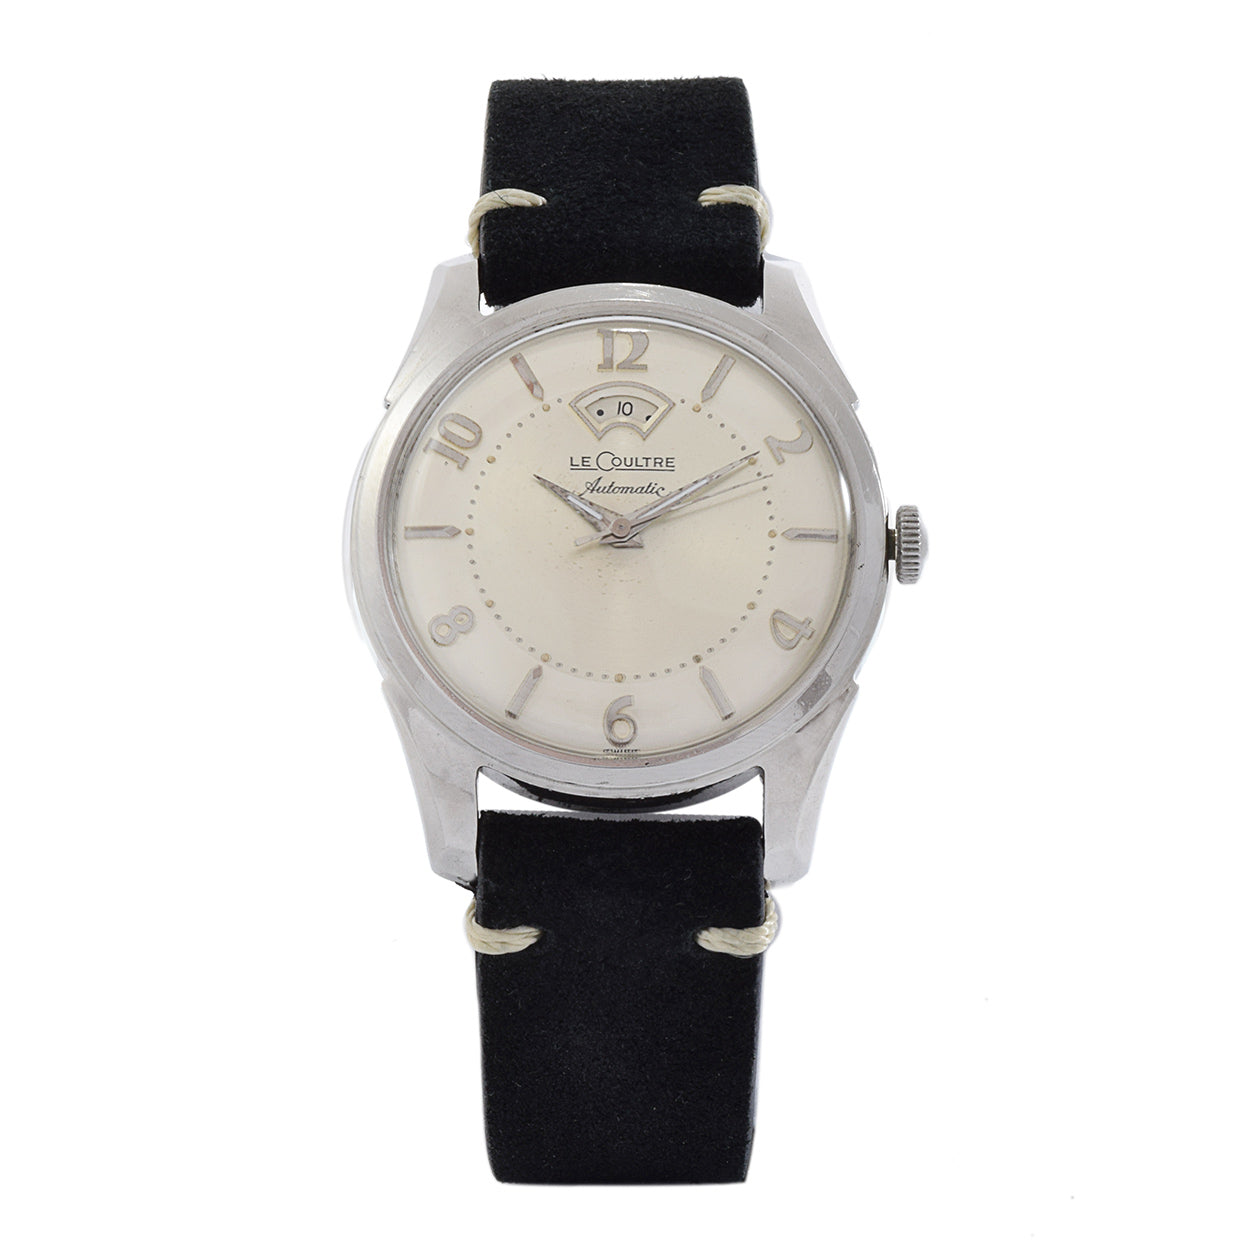 Vintage 1950's LeCoultre Automatic Watch